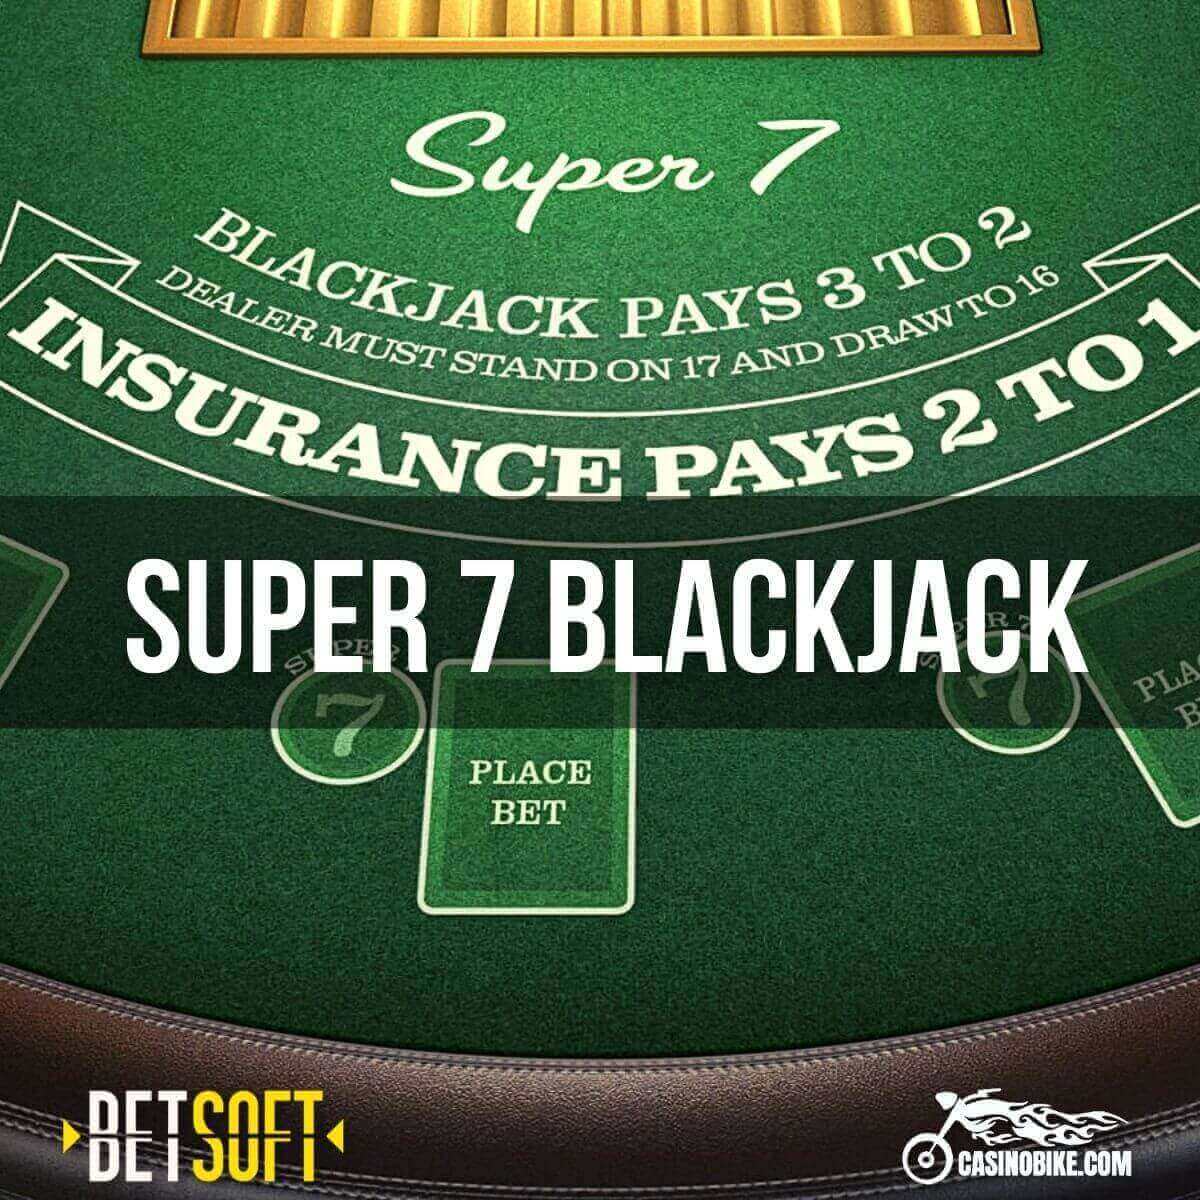 Super 7 Blackjack by BetSoft Gaming